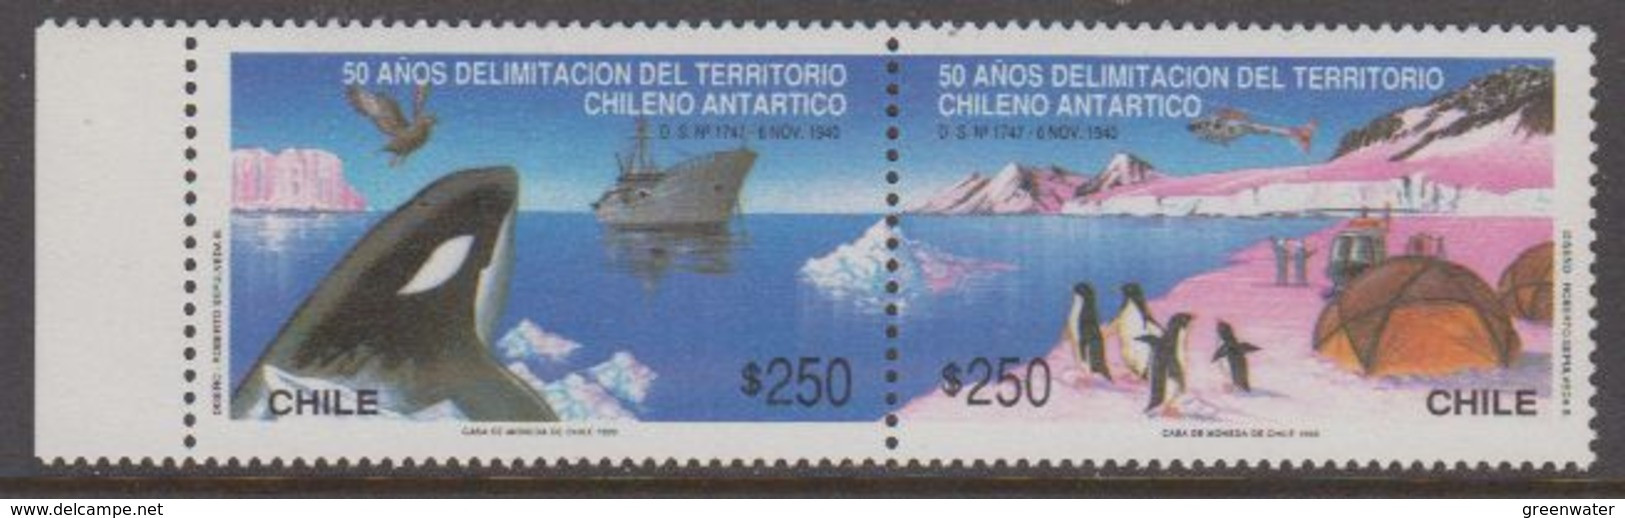 Chile 1990 Antarctica / Treaty / Penguins / Whale 2v Se Tenant ** Mnh (40979B) - Chili